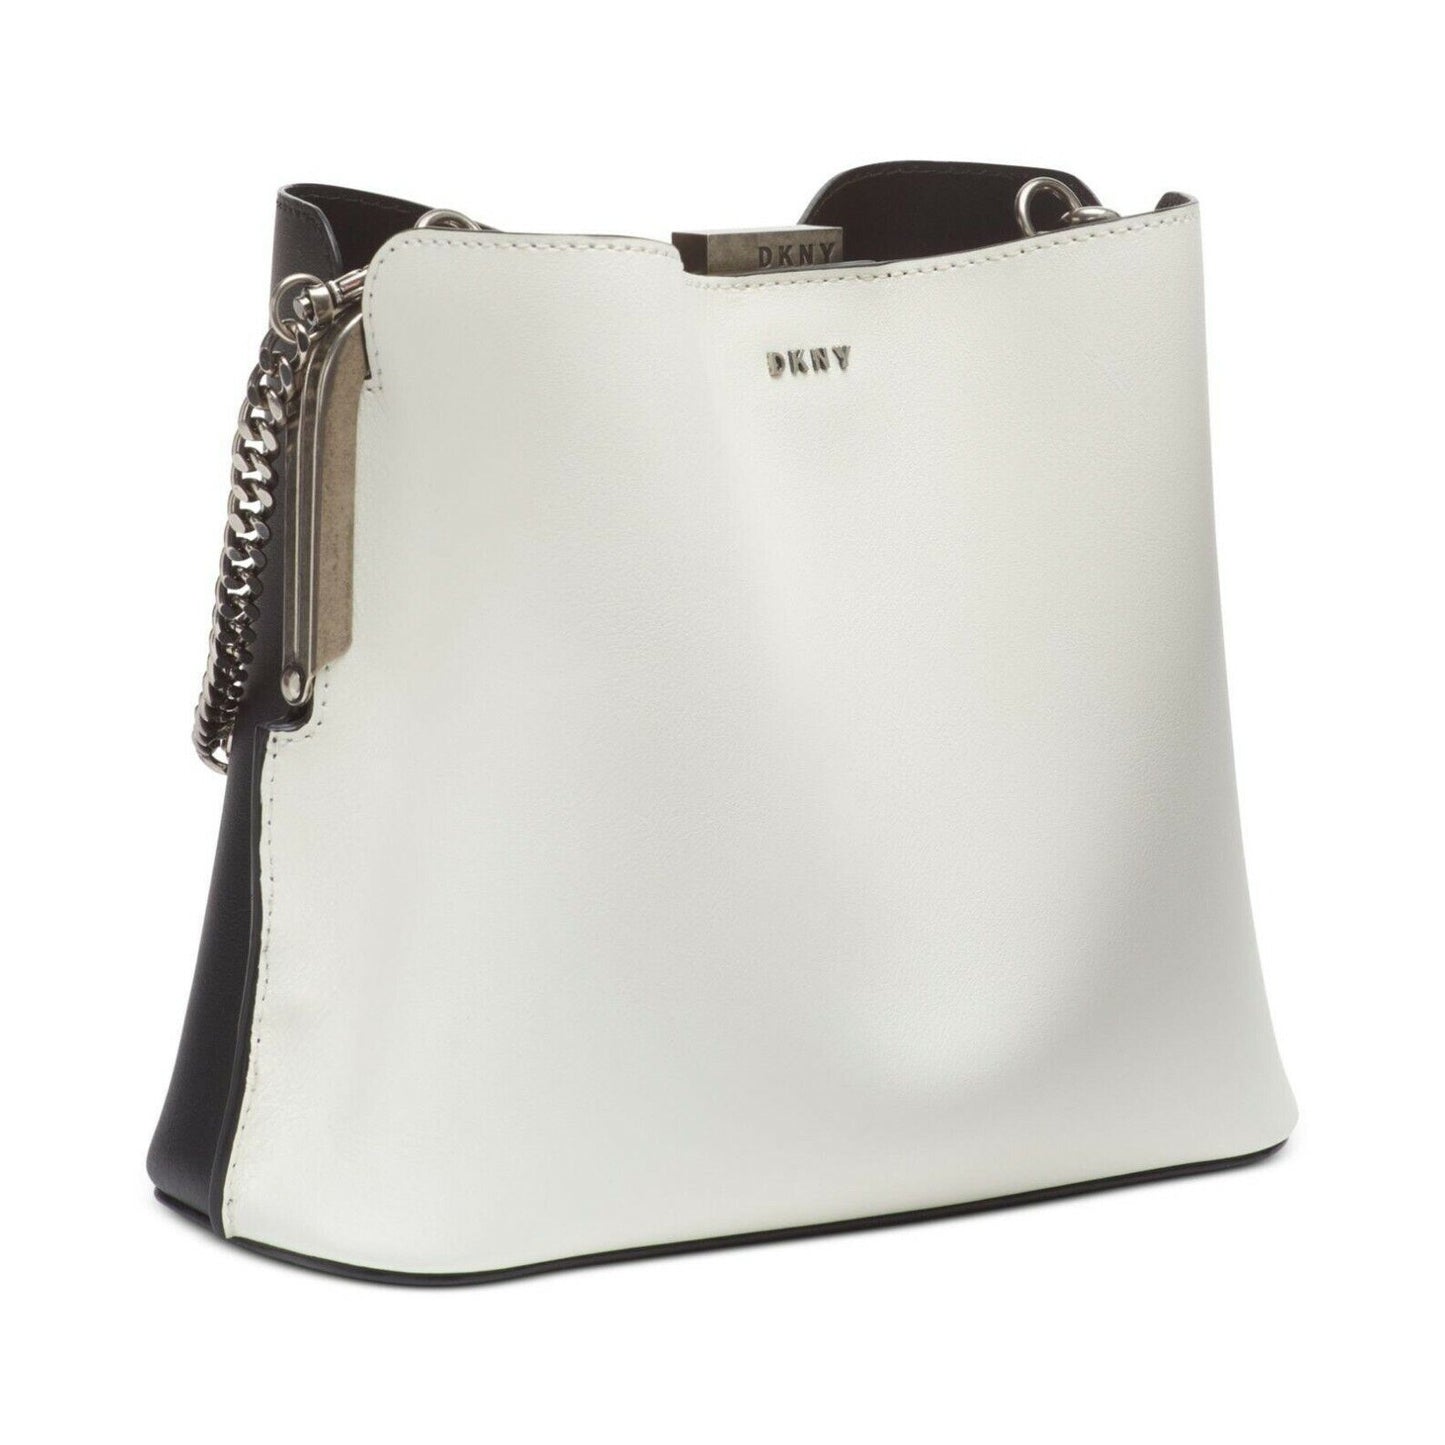 DKNY FARRAH LEATHER BUCKET BAG, WHITE FRONT BLACK BACK SNAP CLOSURE NWT $248